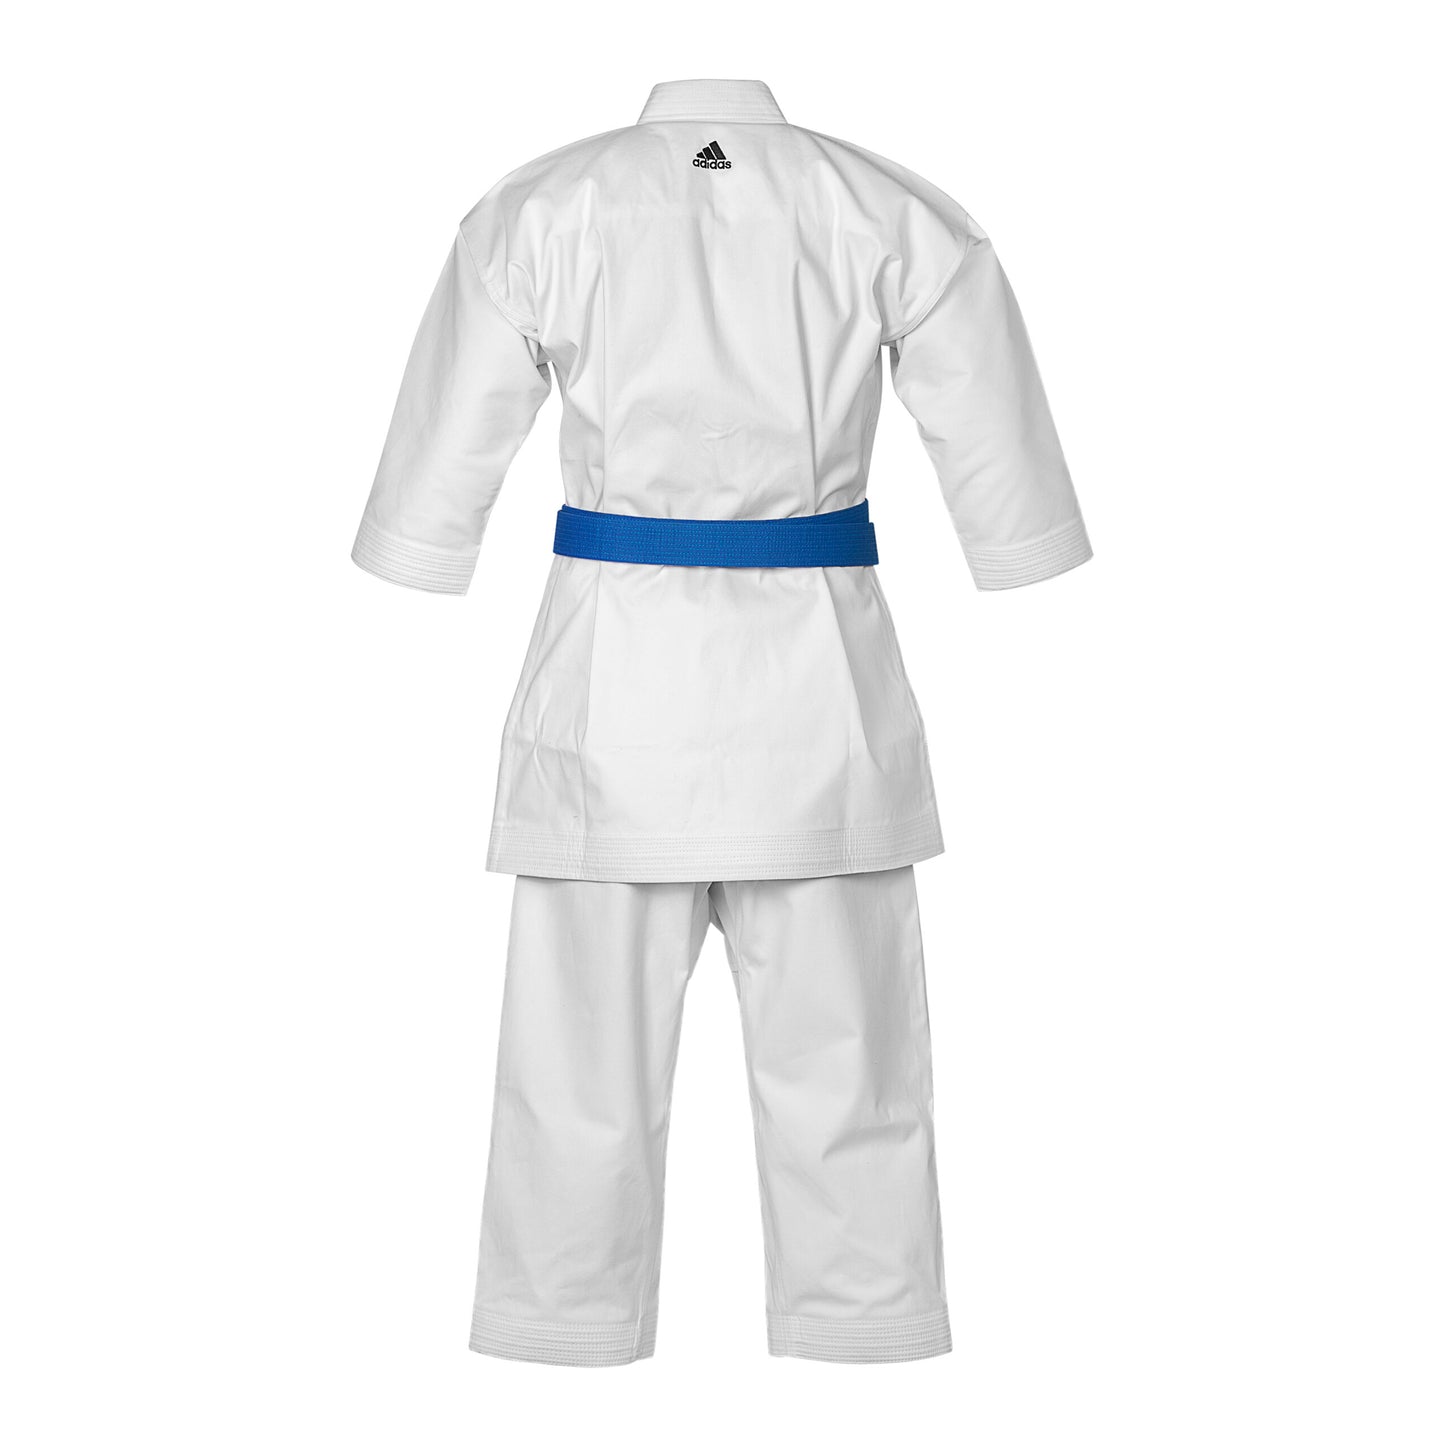 K999 Adidas Shori Kata Karate Gi Uniform White Wkf Approved 02